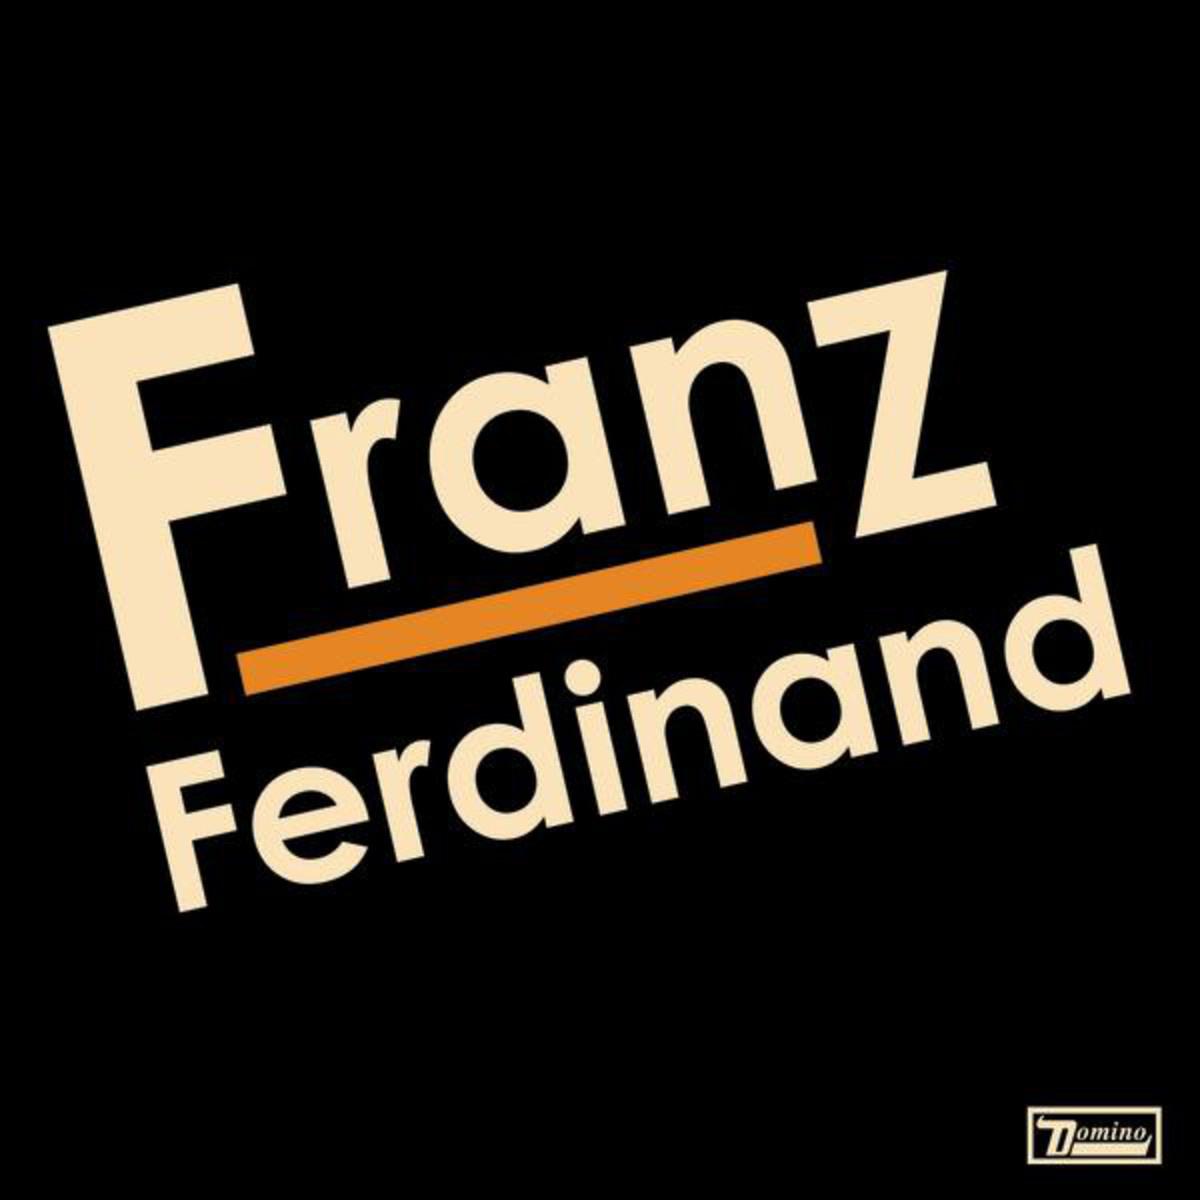 Jacqueline歌词 歌手Franz Ferdinand-专辑Franz Ferdinand-单曲《Jacqueline》LRC歌词下载